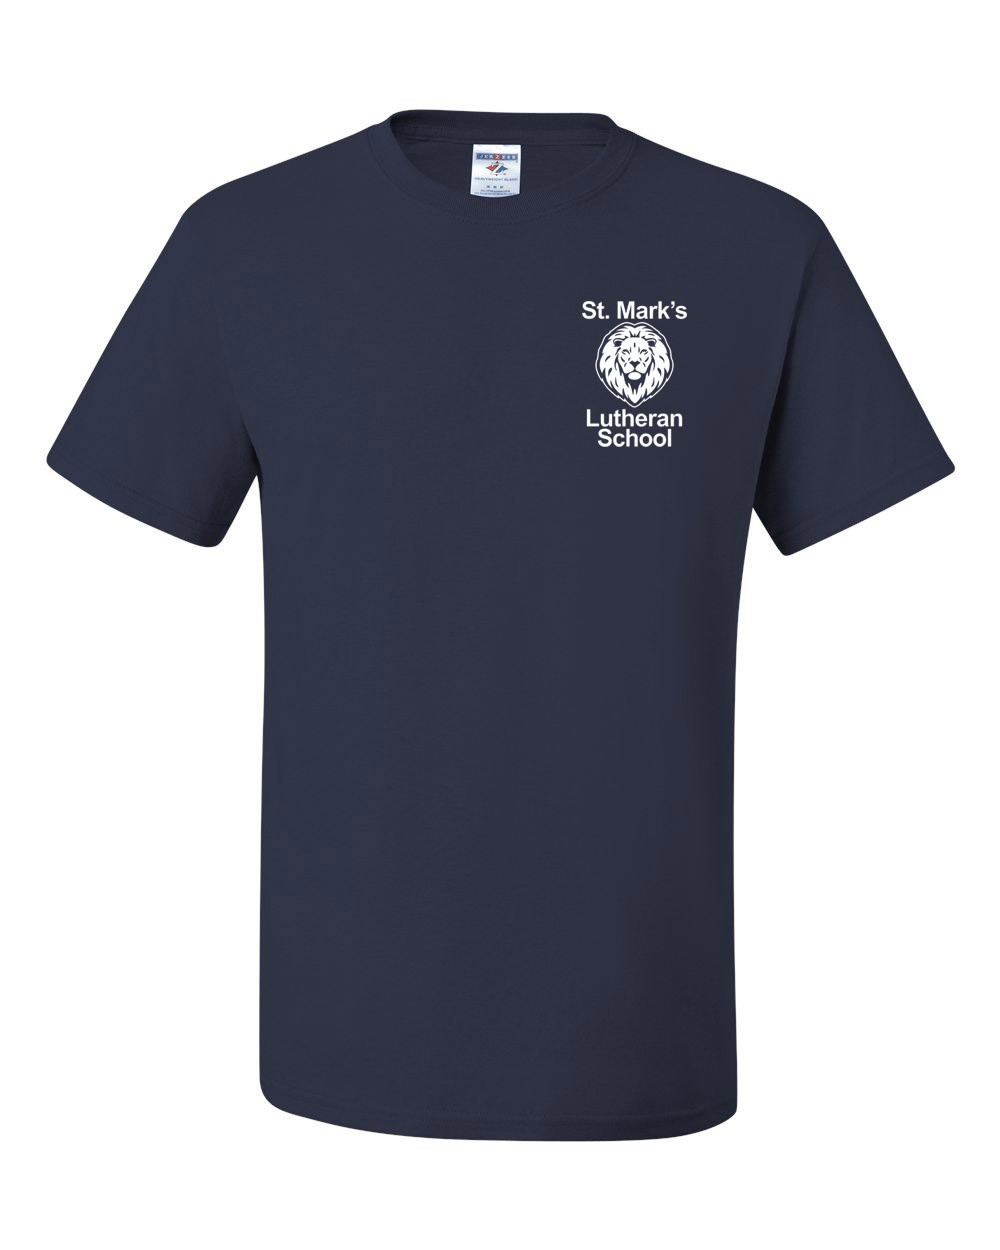 SMLS S/S Navy Gym T-Shirt w/ School Logo